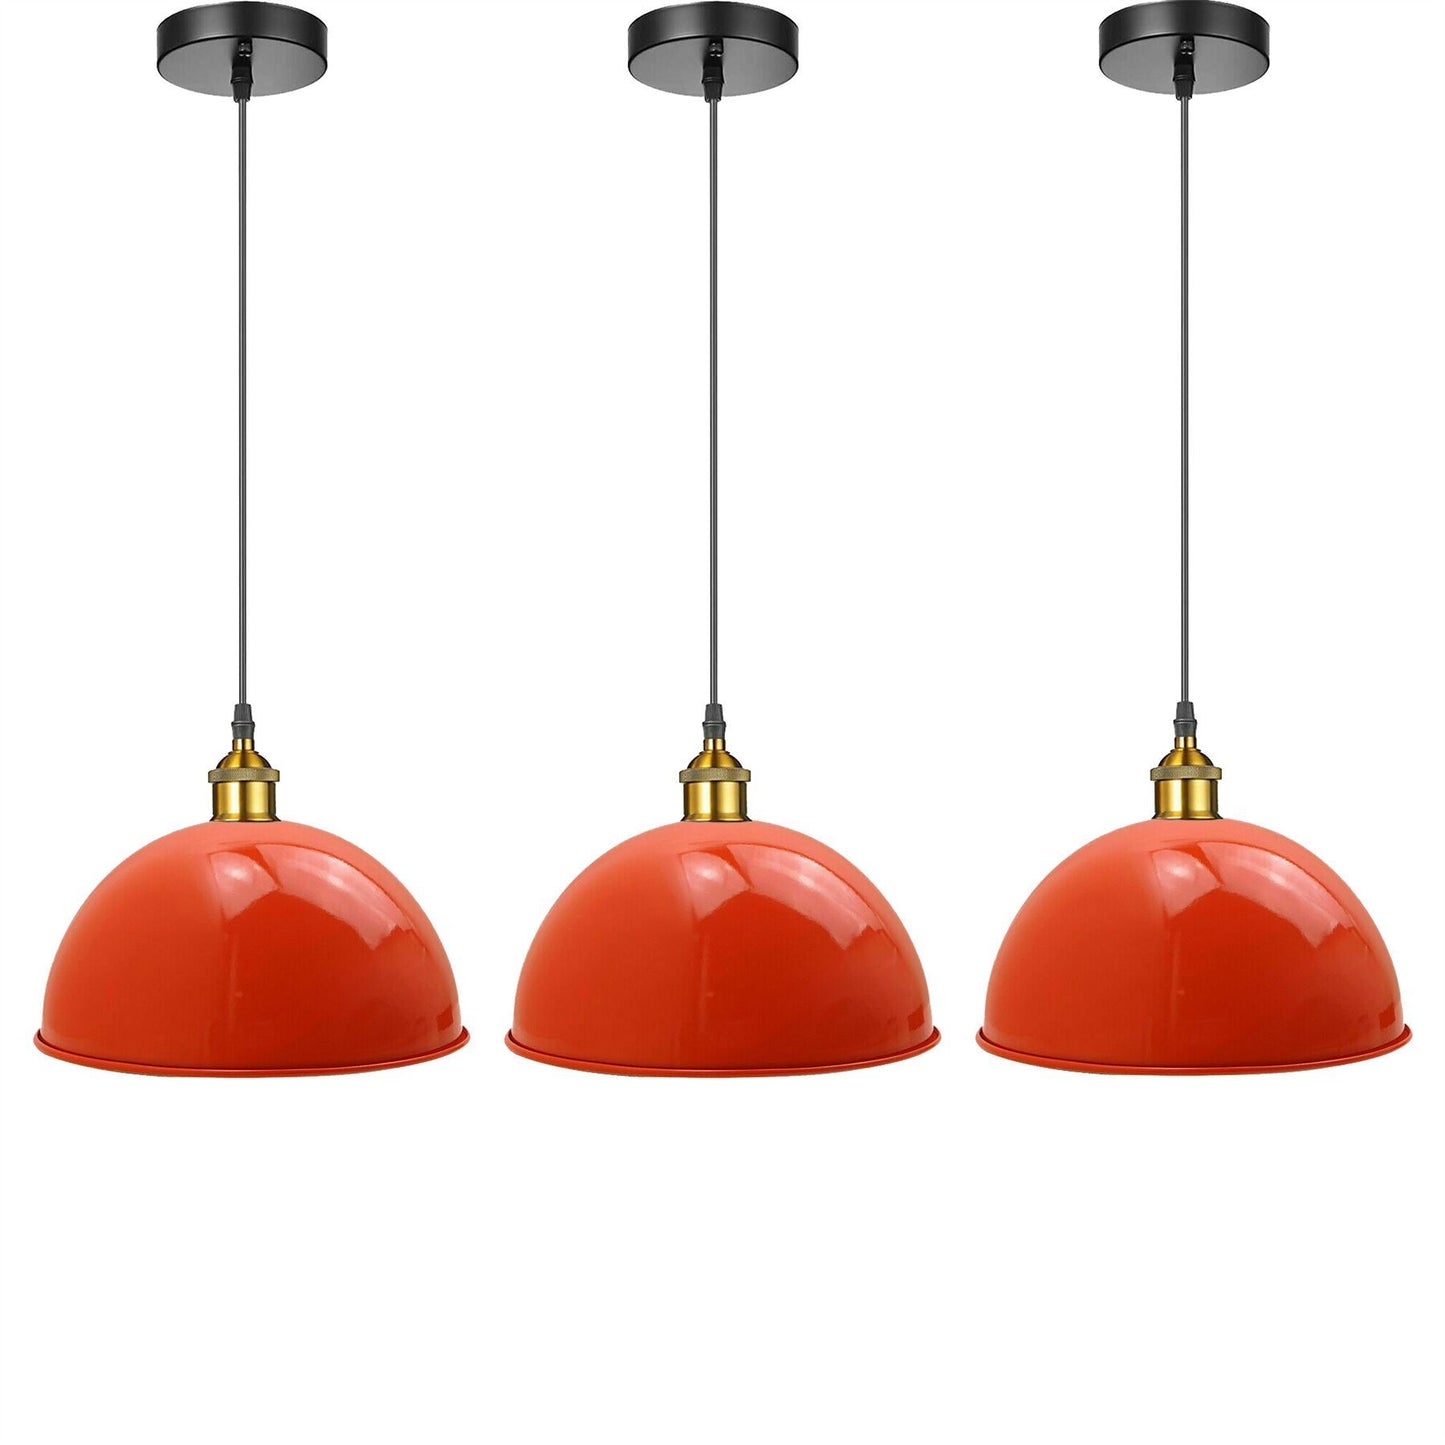 Vintage Chic Orange Cone Shade Adjustable Ceiling Pendant Light~2111